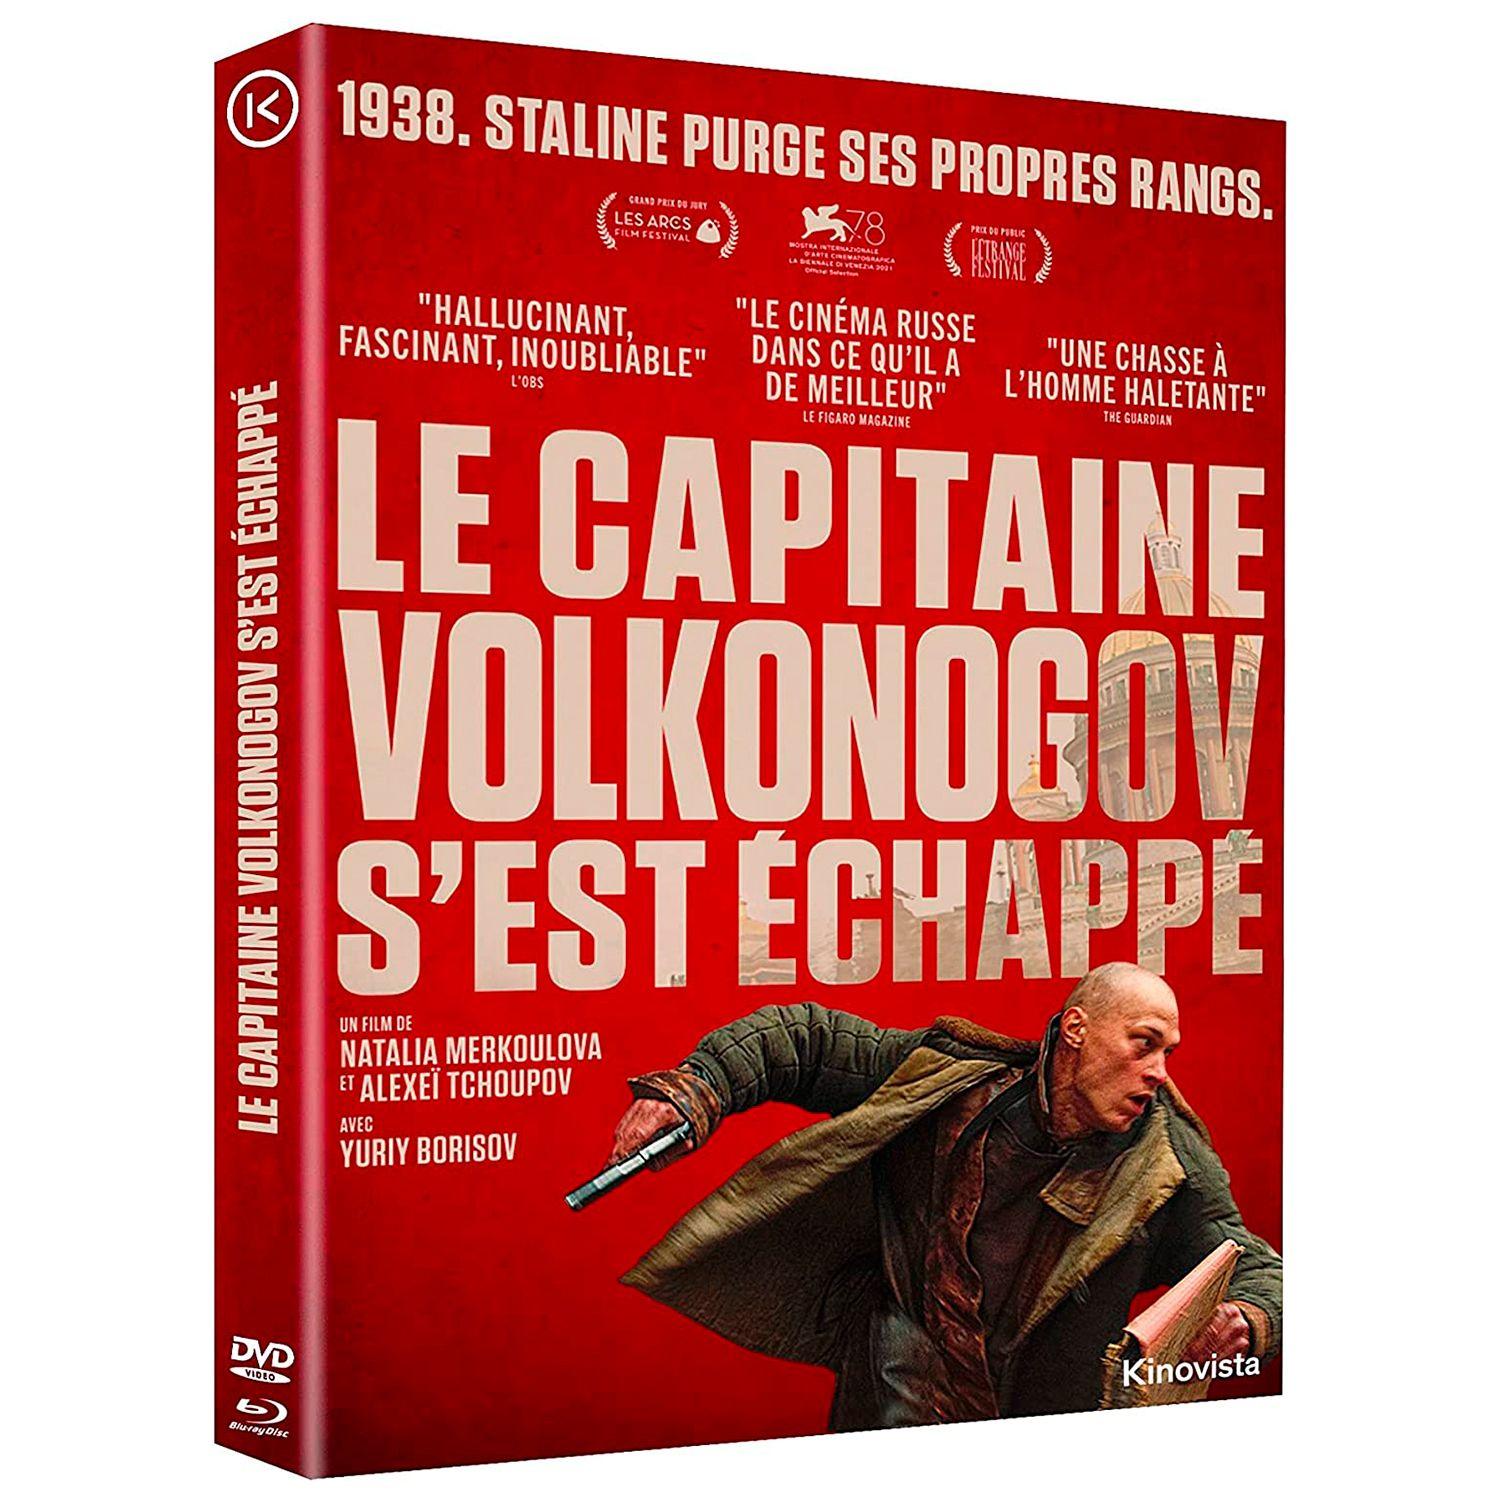 Капитан Волконогов бежал (2021) (Blu-ray + DVD) Digipack